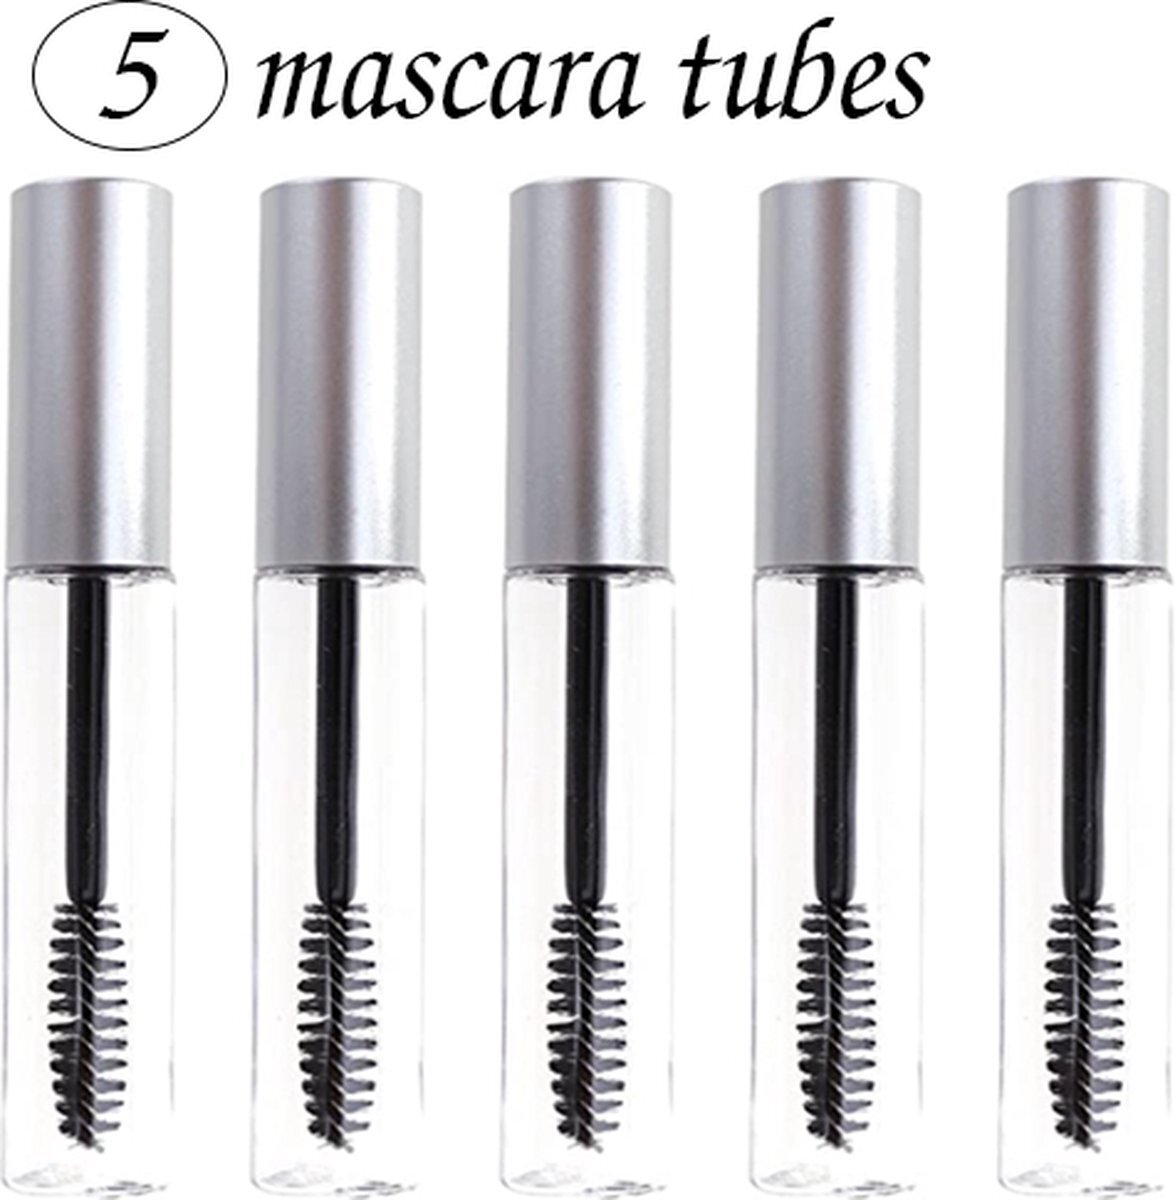 Wehl products mascara tube leeg - Zilver- 5 tubes - mascara leeg - mascara flesje - lege tube